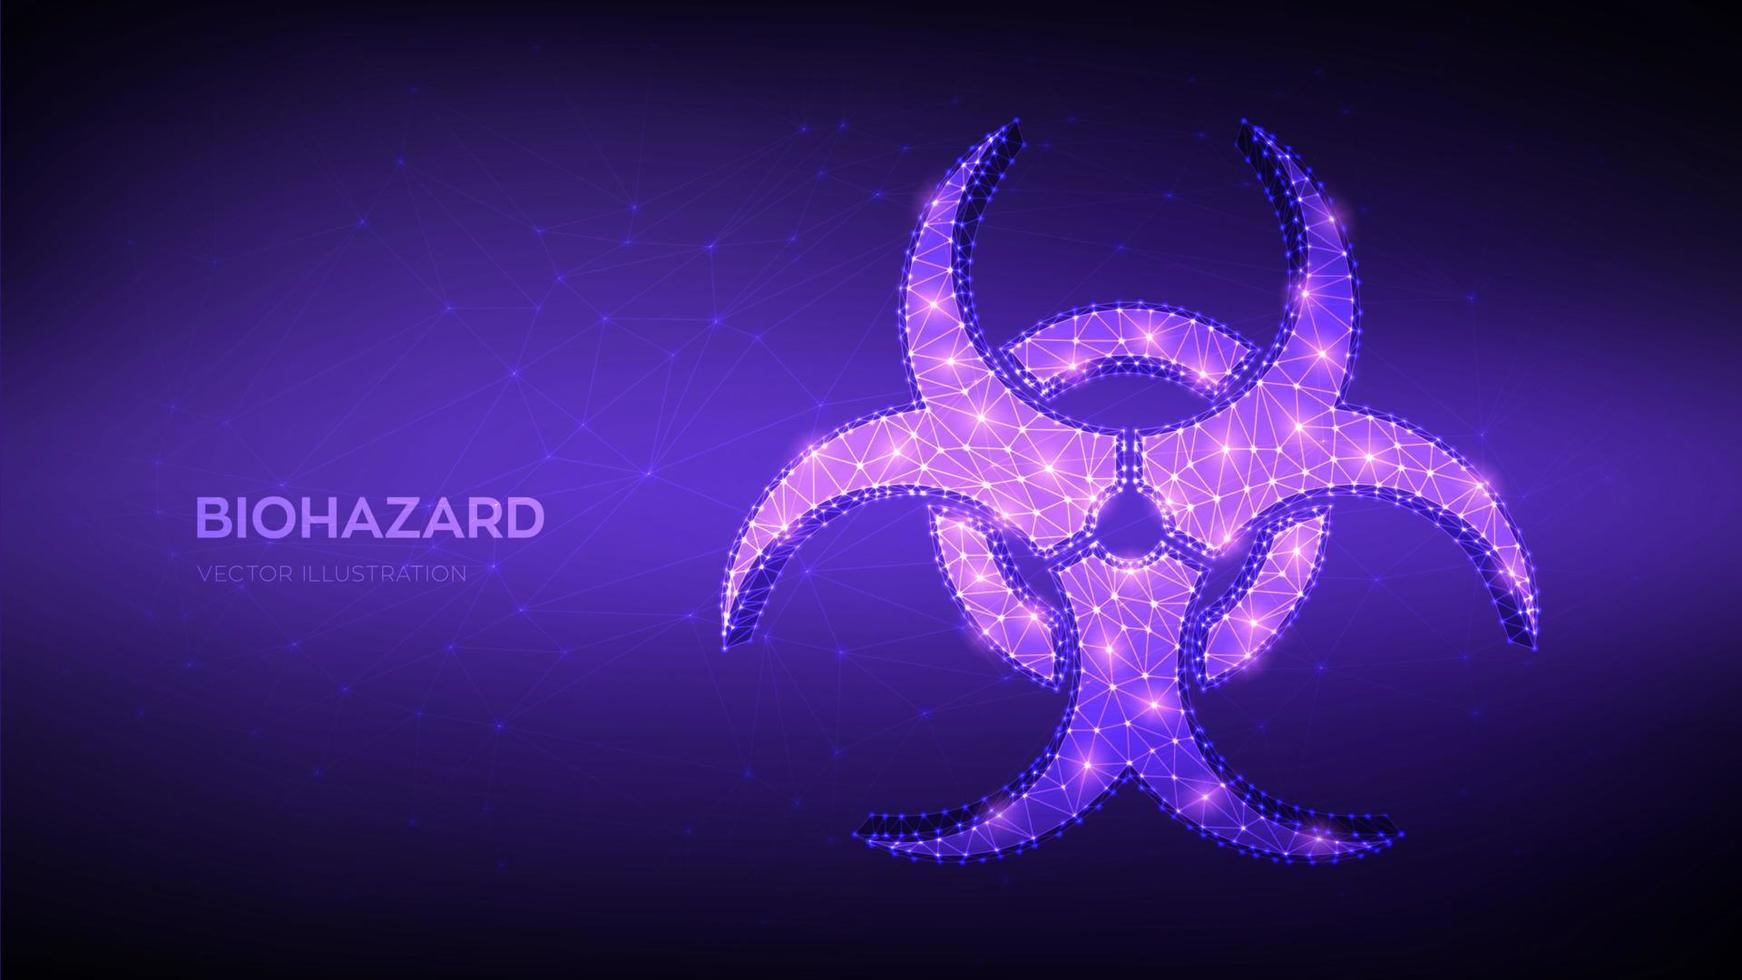 Biohazard symbol. Low polygonal abstract biohazard, epidemic, virus alert, infection, bacteria, contagion, toxic, waste, quarantine, contamination sign. Vector illustration.